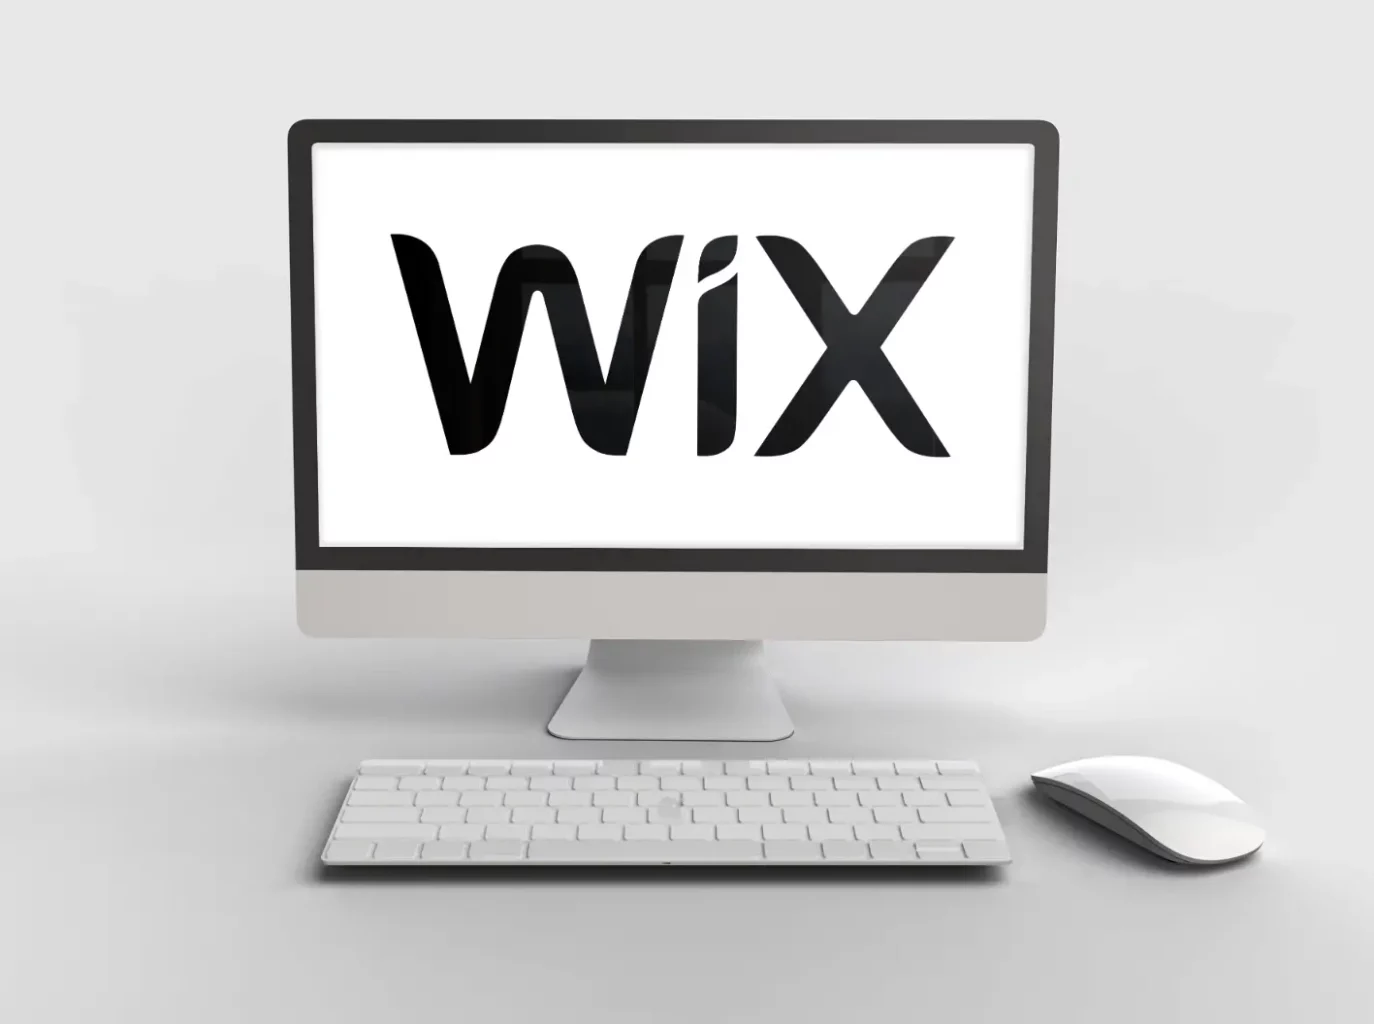 wix cennik i logo na komputerze